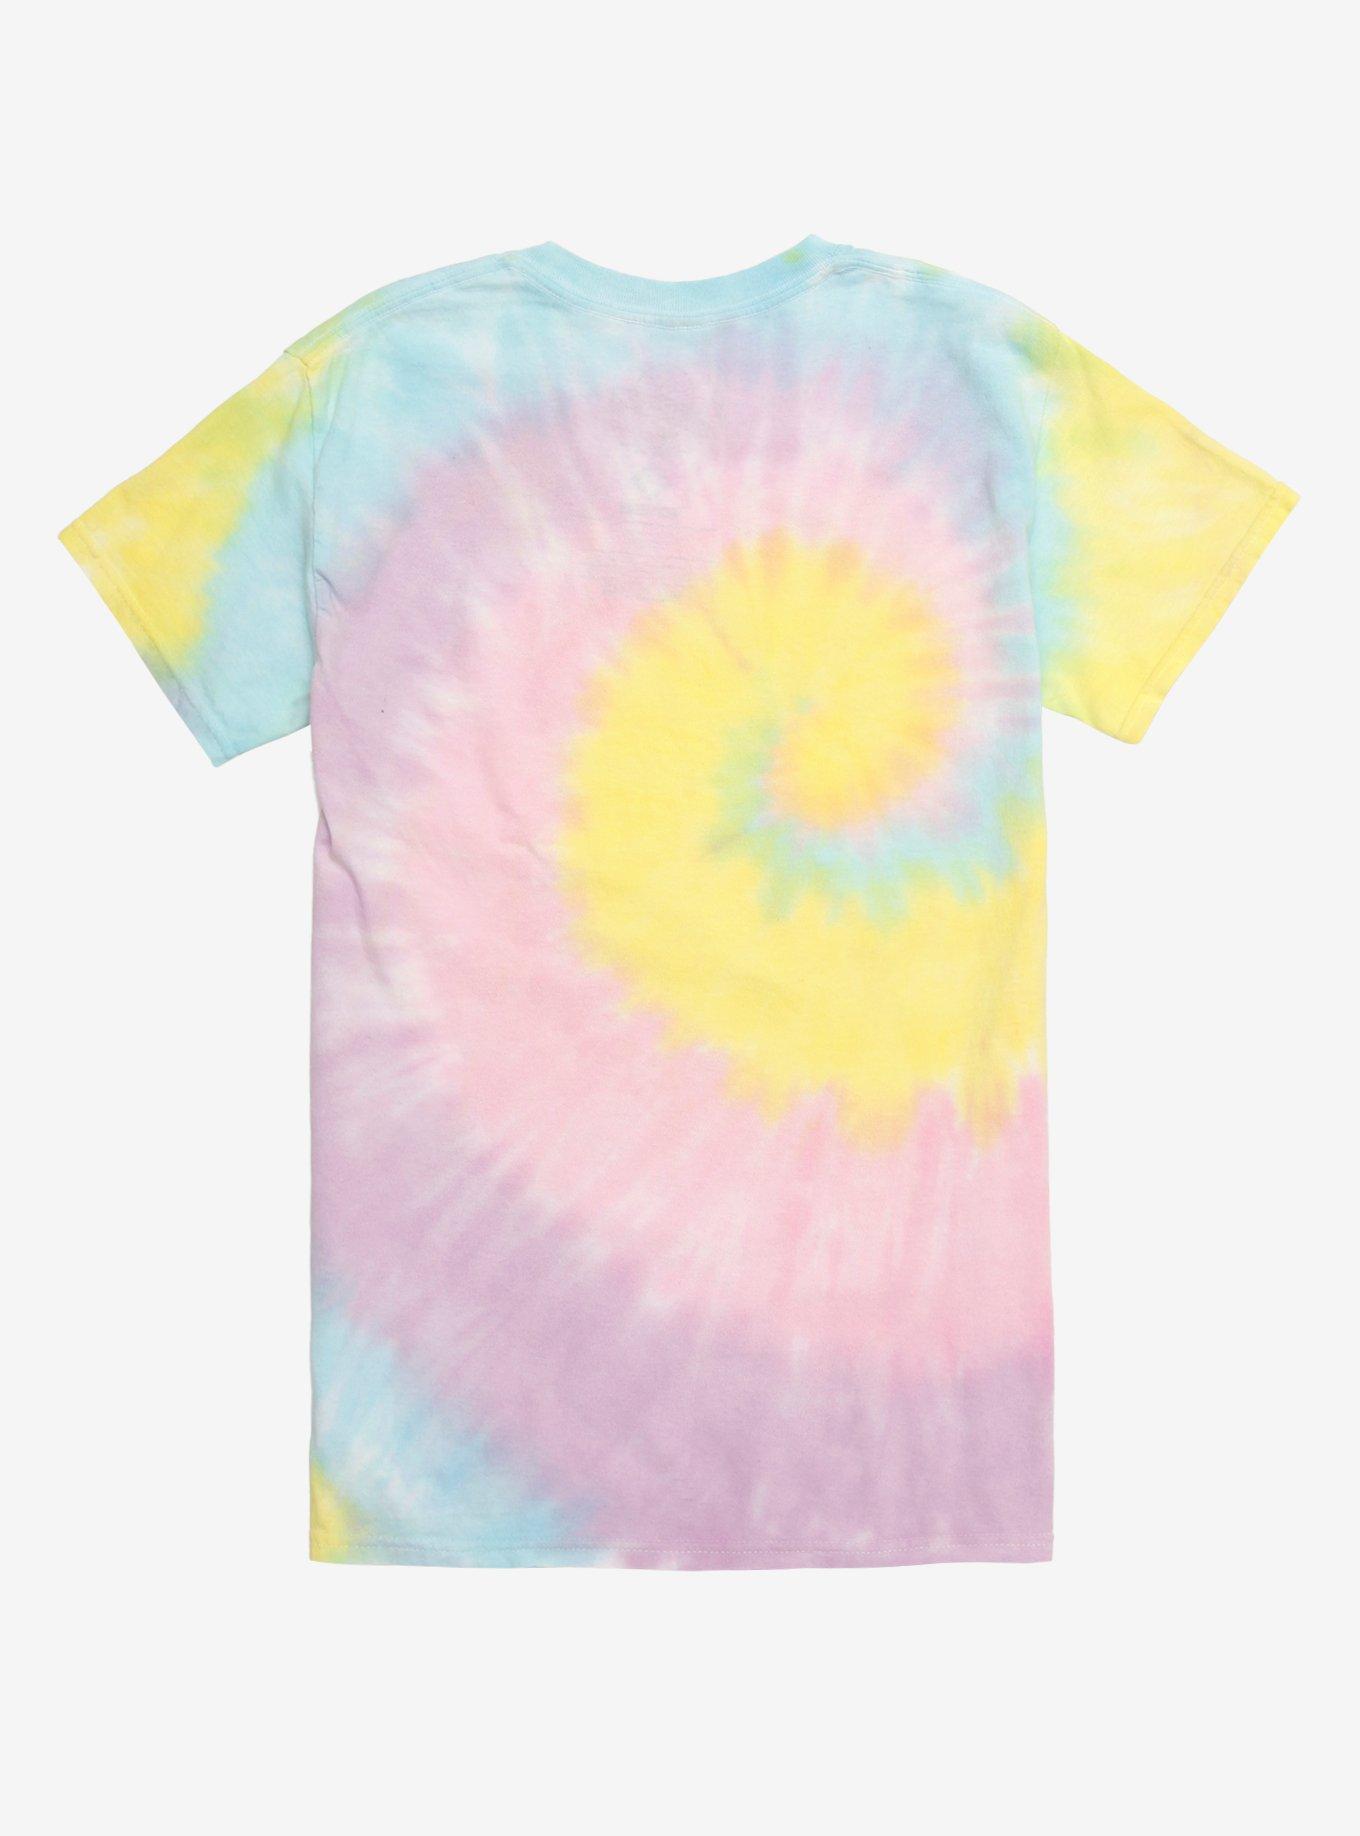 Airheads Pastel Tie-Dye T-Shirt, MULTI, alternate